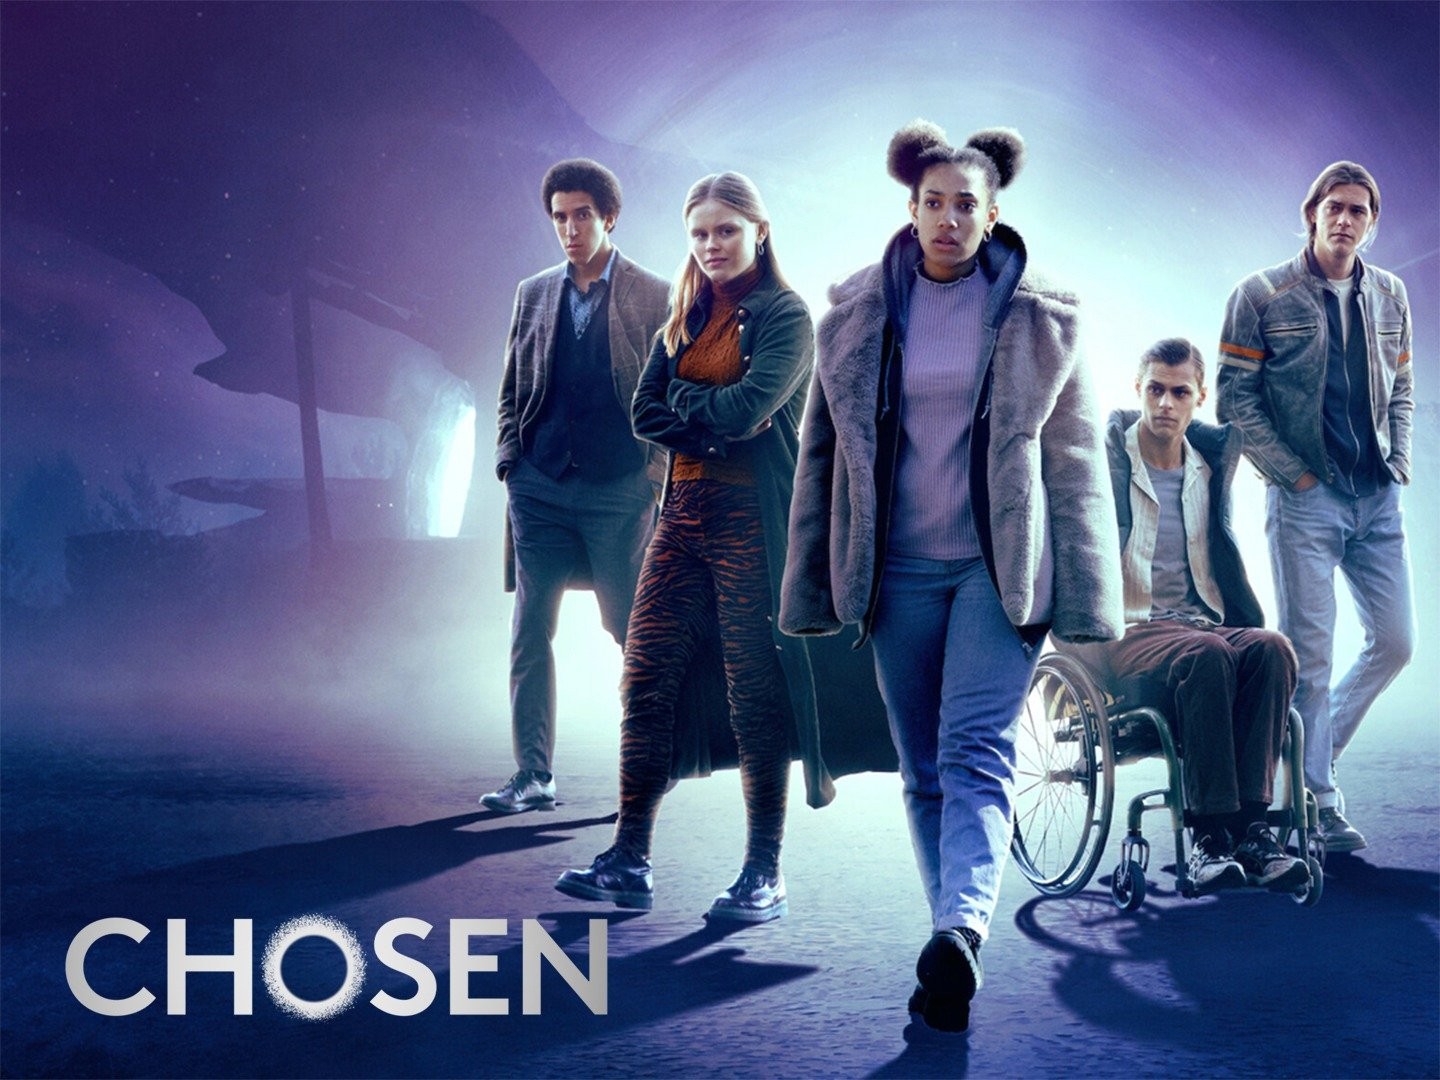 The Chosen, Season 1.2 (Series Review) – Box Office Revolution